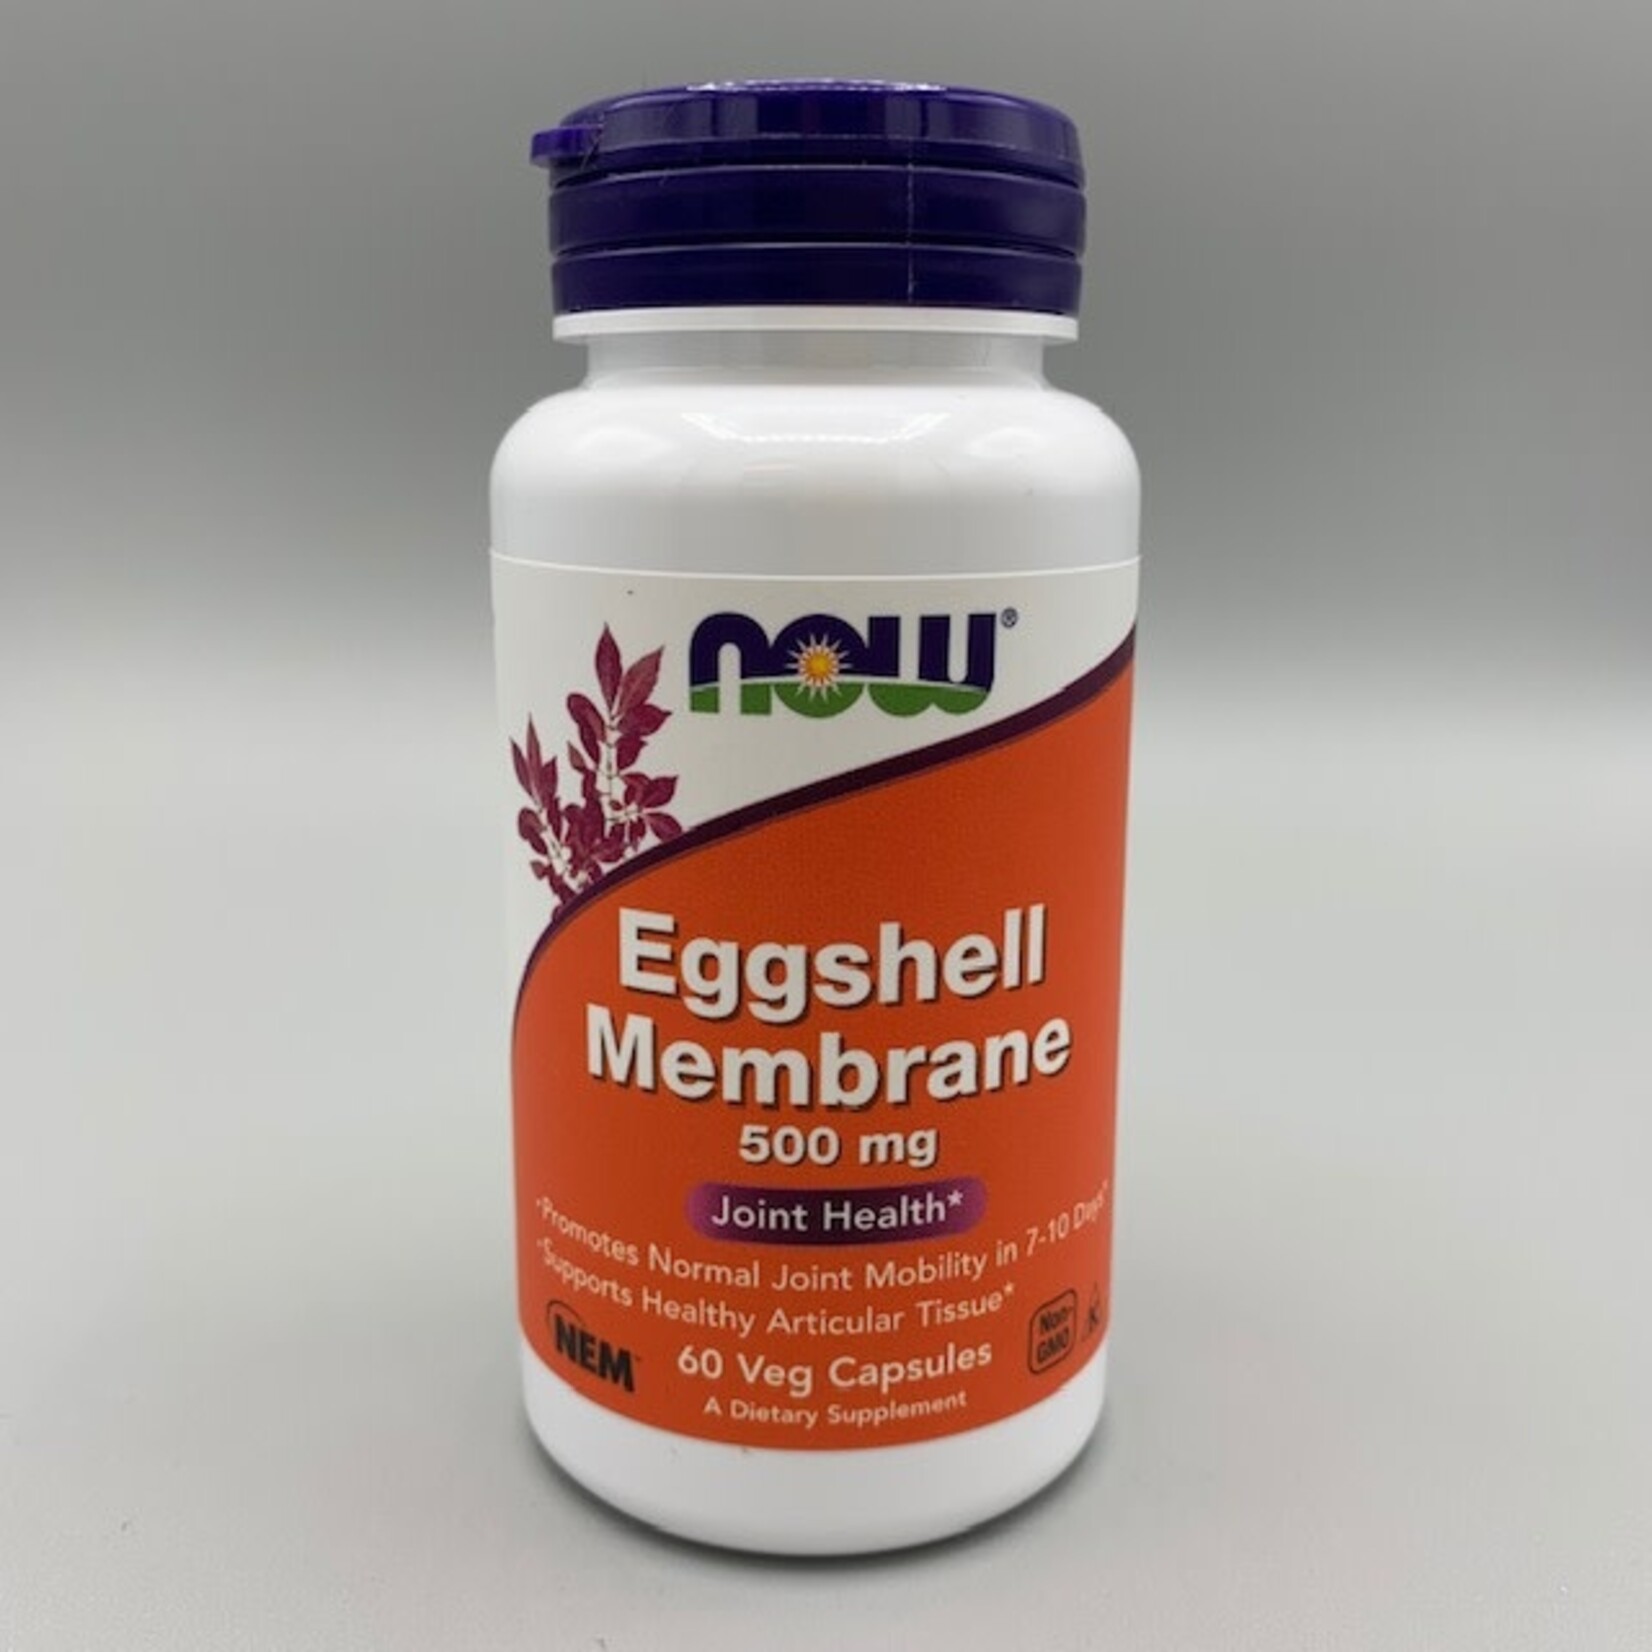 NOW Eggshell Membrane (Natural) - 500 mg, 60 Veg. Capsules